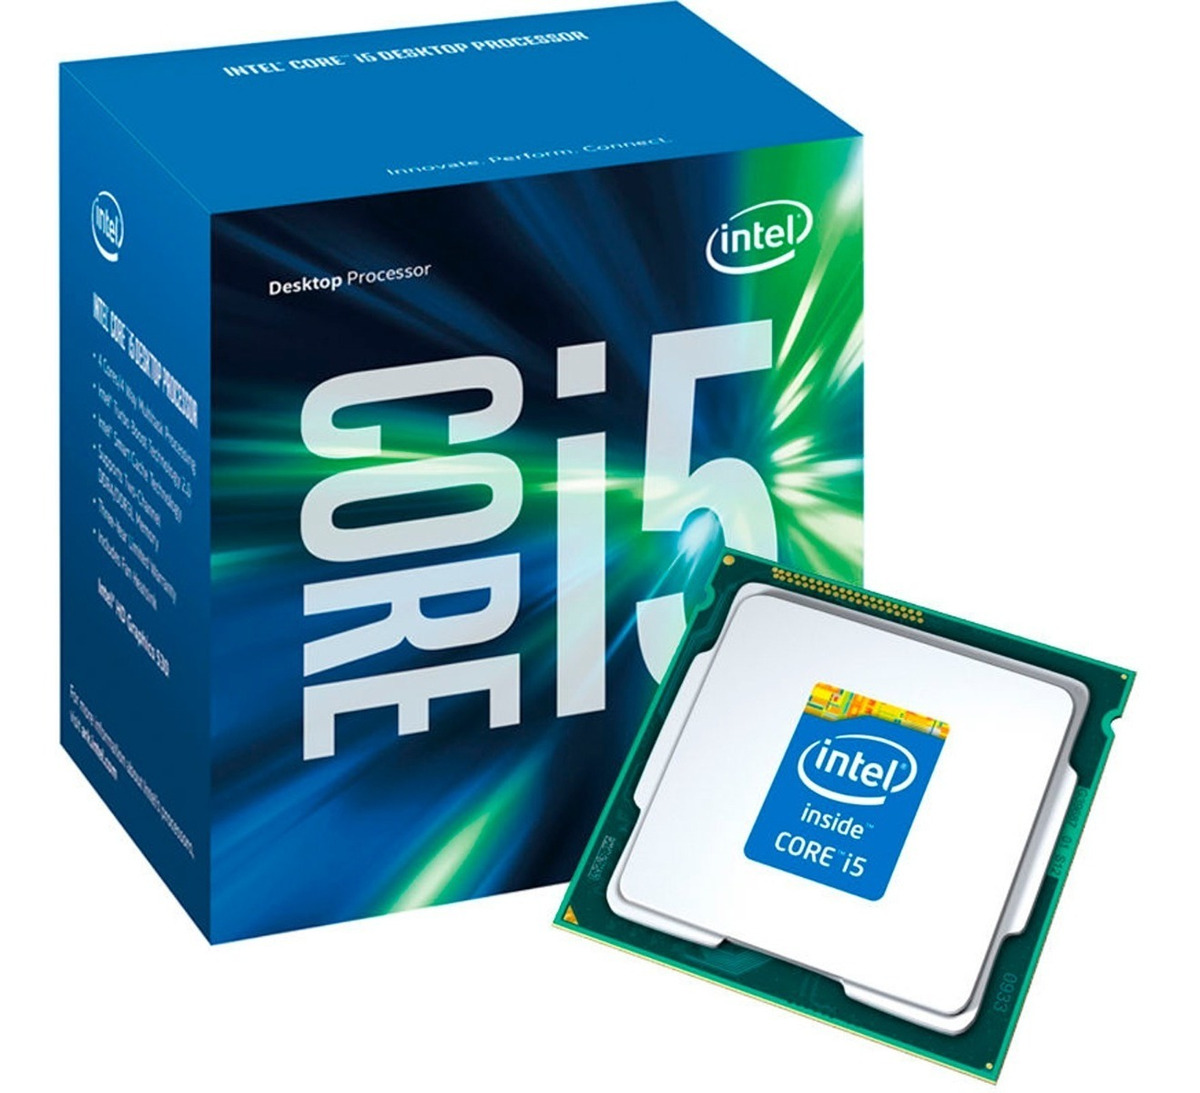 Какой интел коре лучше. Процессор Intel Core i5. Core i5-7400 lga1151. Процессор Интел коре i5. Процессор Интел кор ай 5.